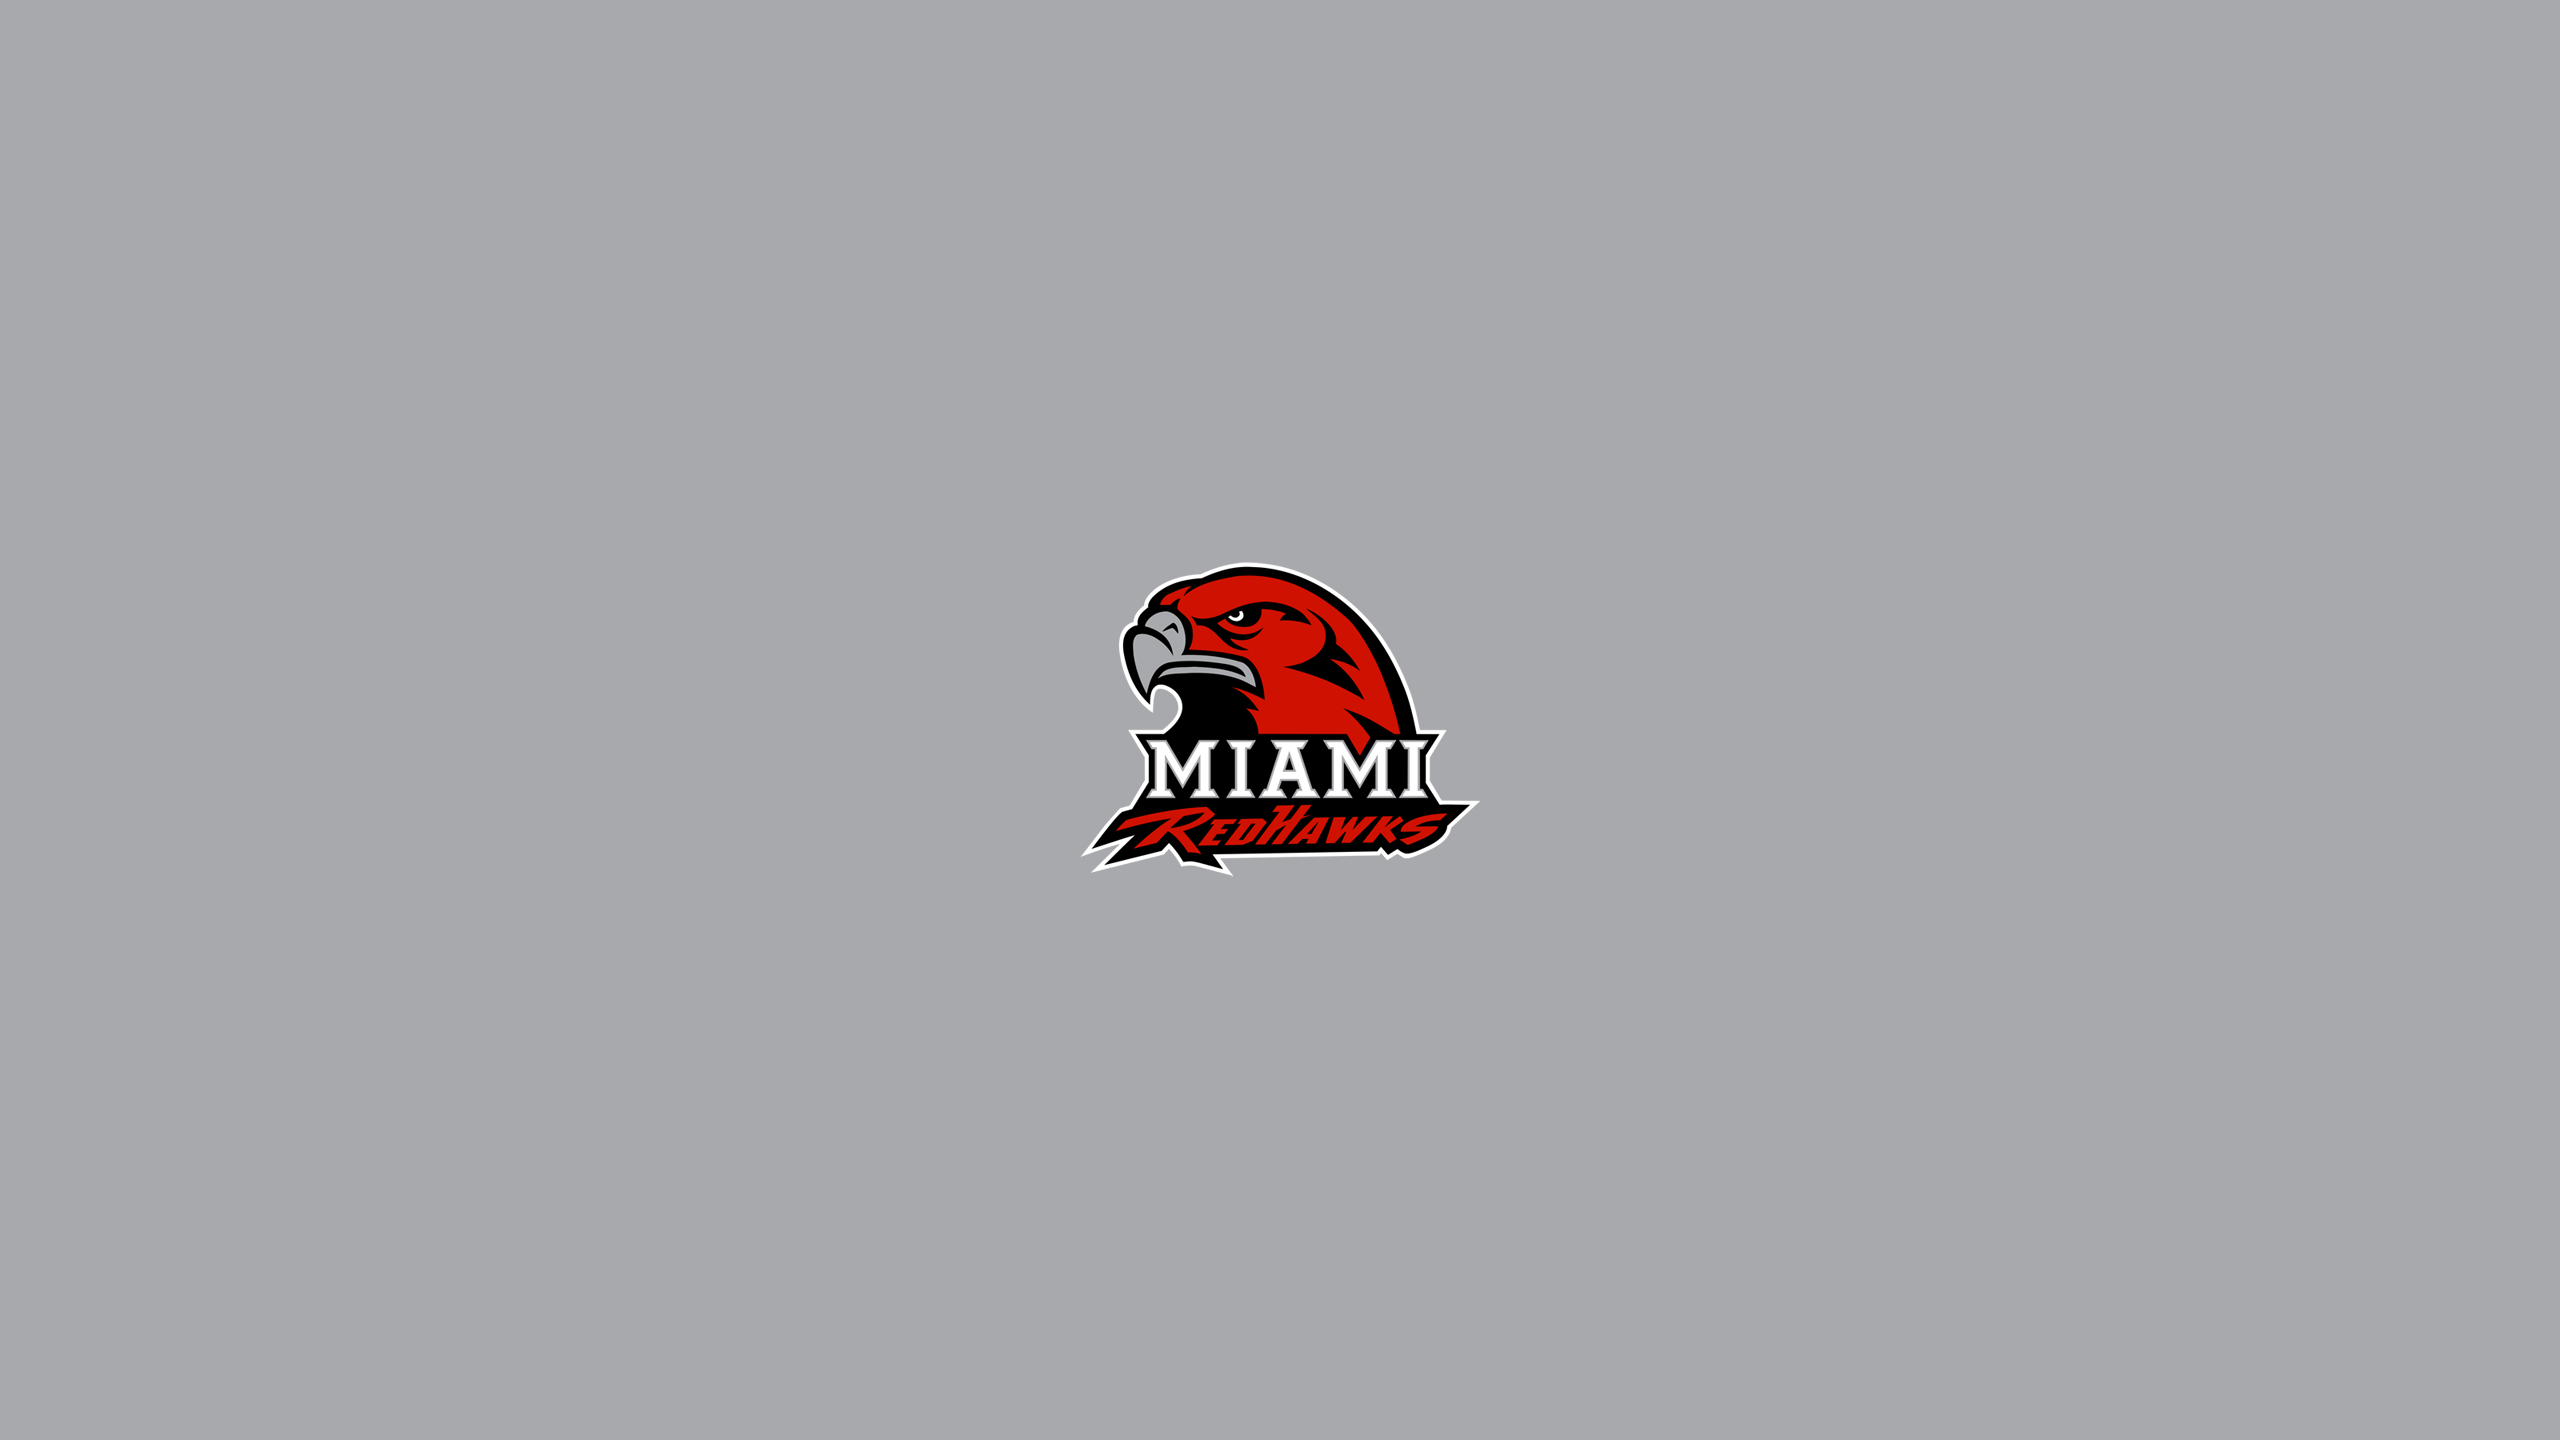 Miami Ohio RedHawks Football - NCAAF - Square Bettor